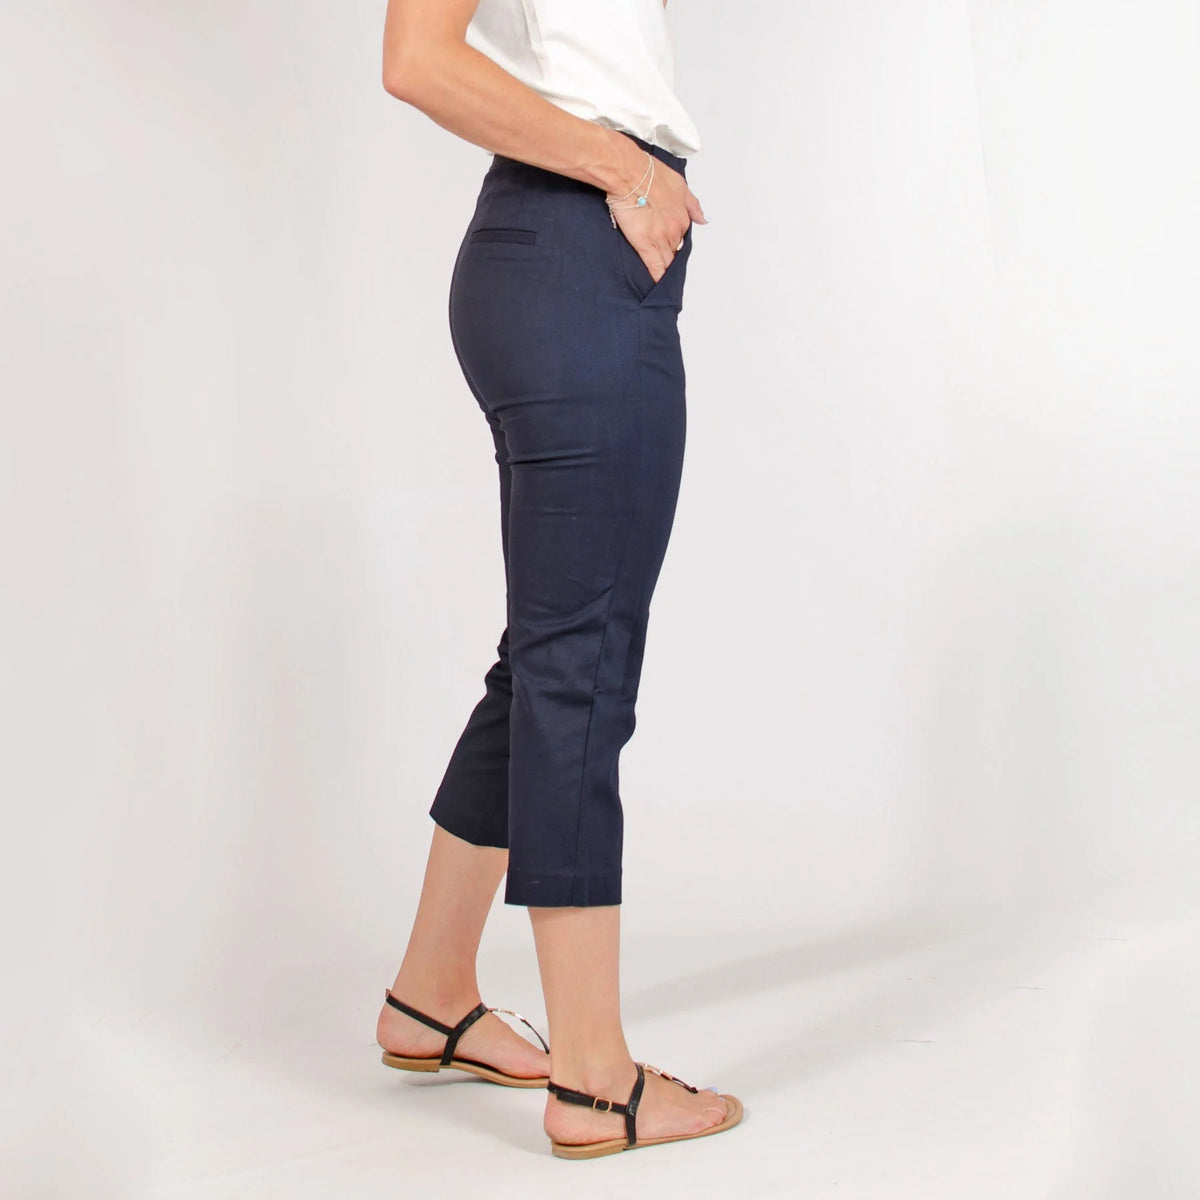 M&S Mia 3/4 Length Crop Trousers